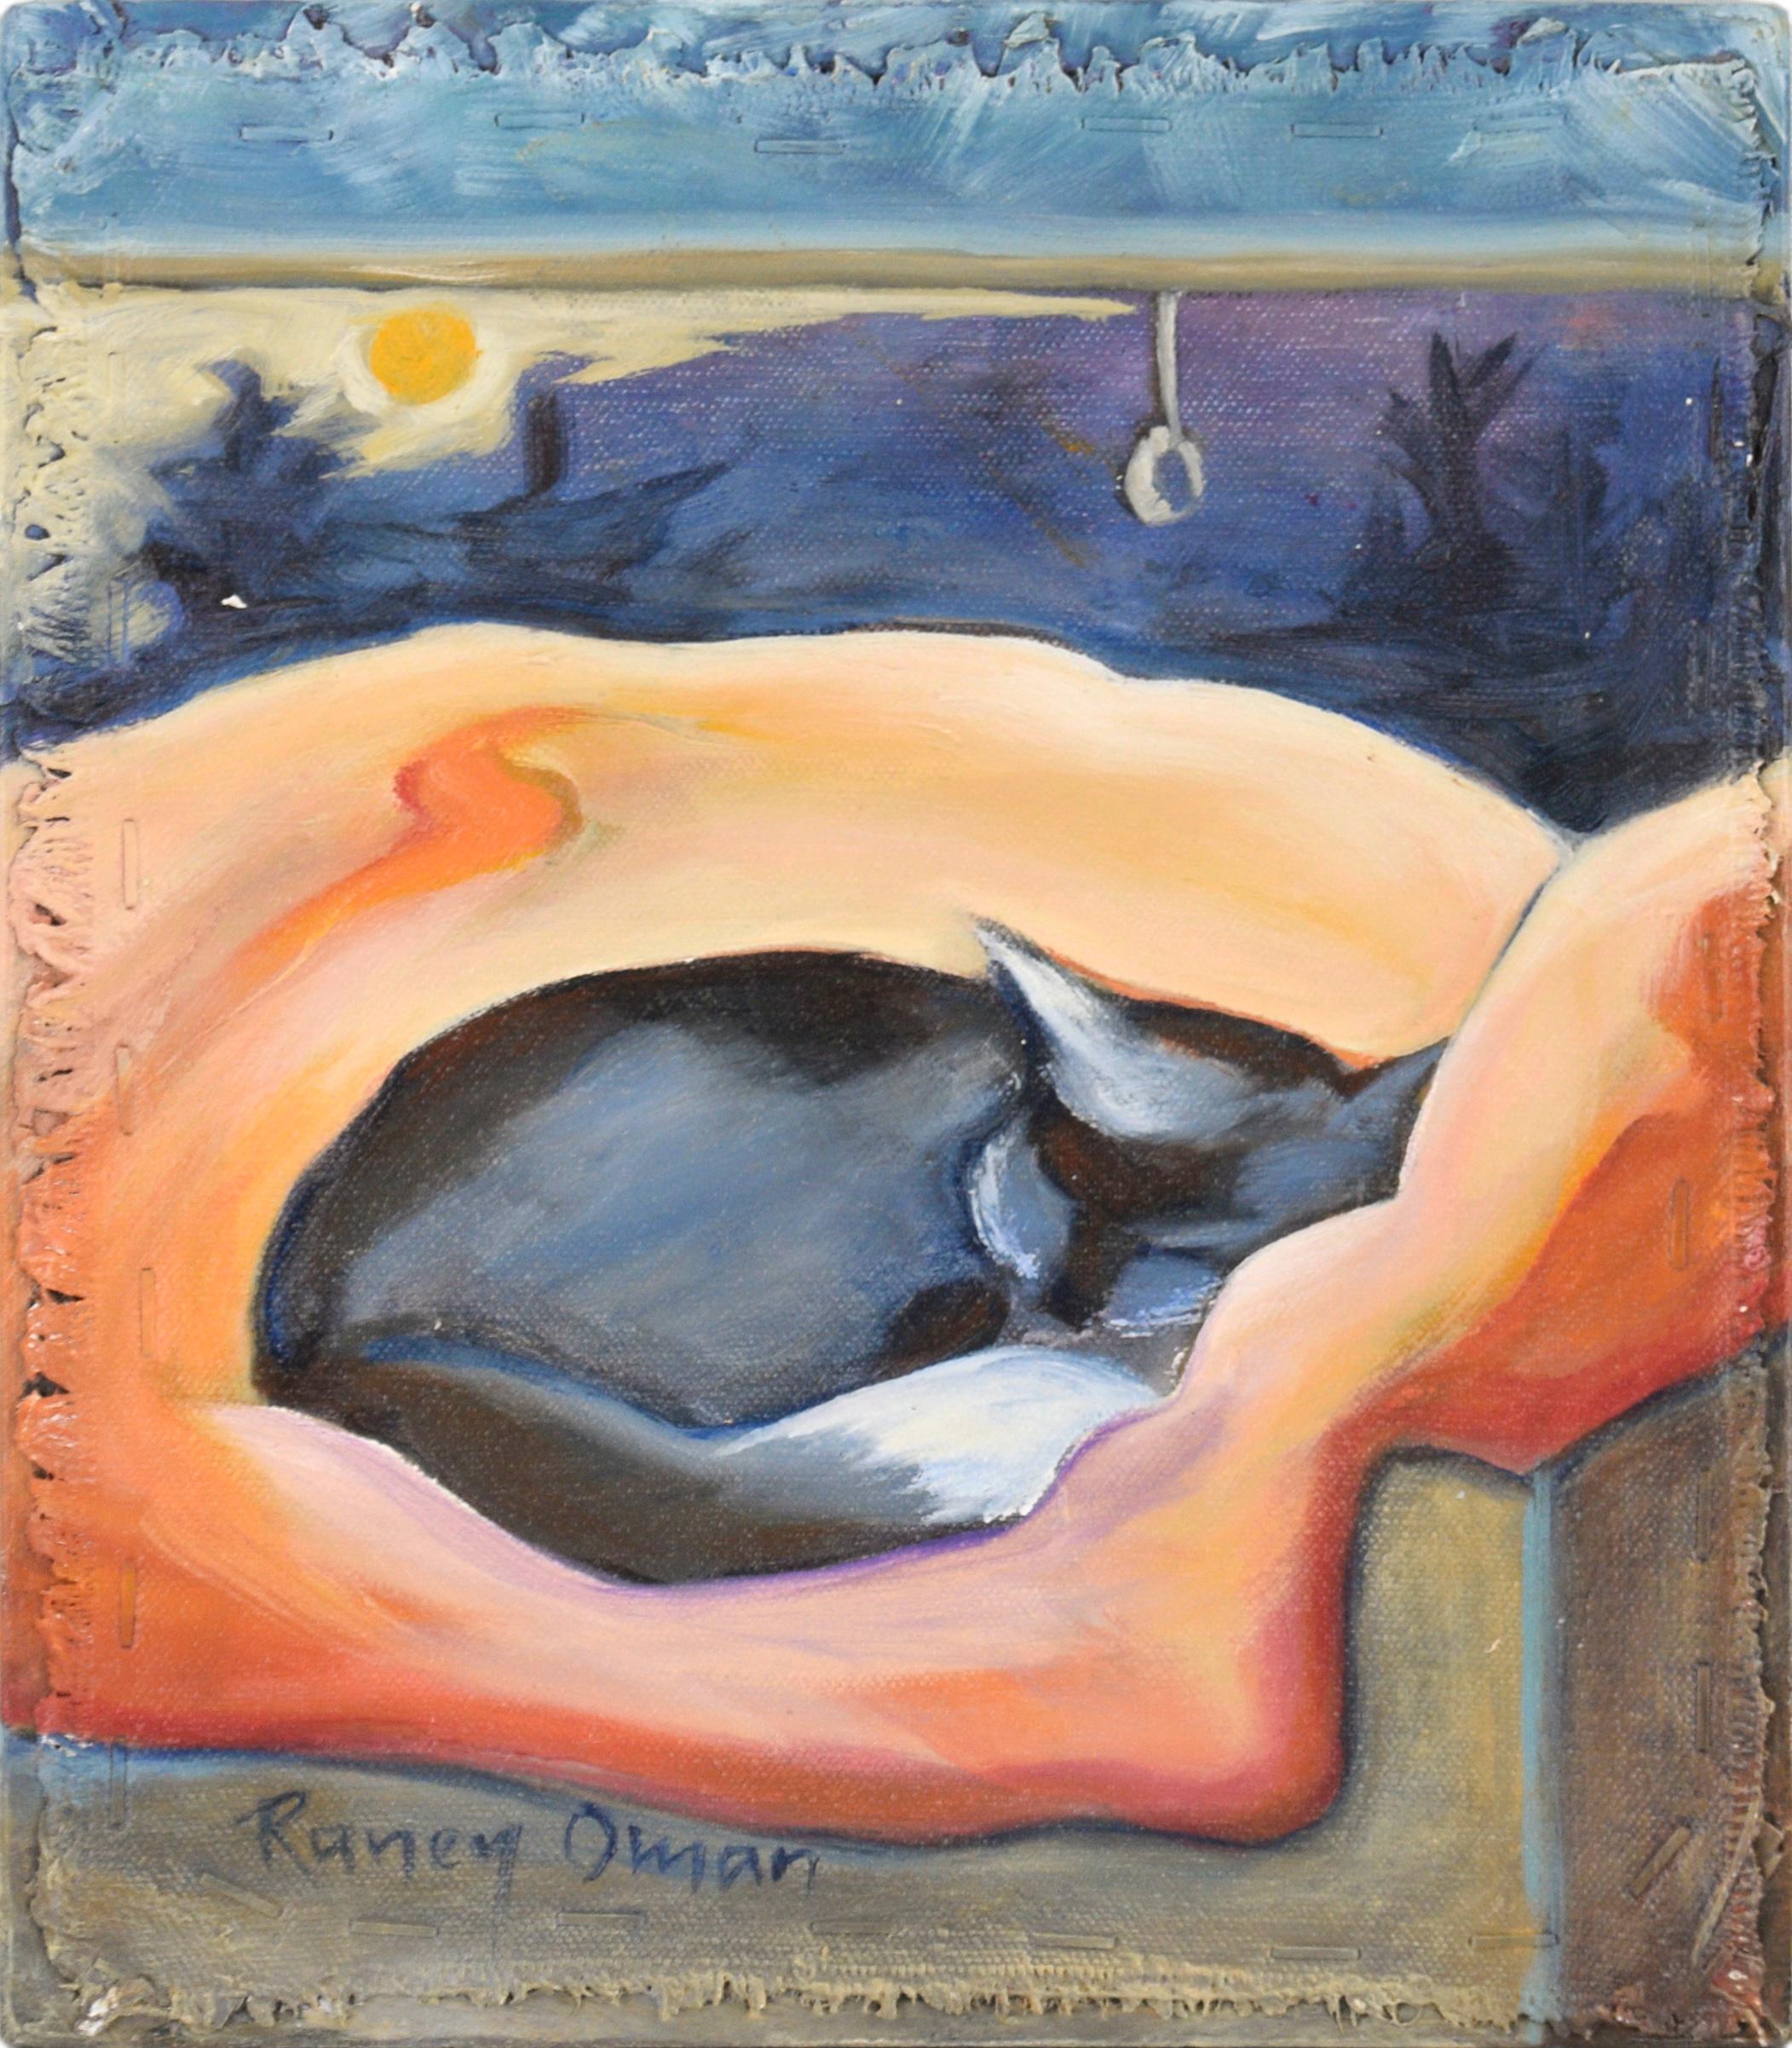 Marion Raney Oman Interior Painting - "Blanket Refuge"